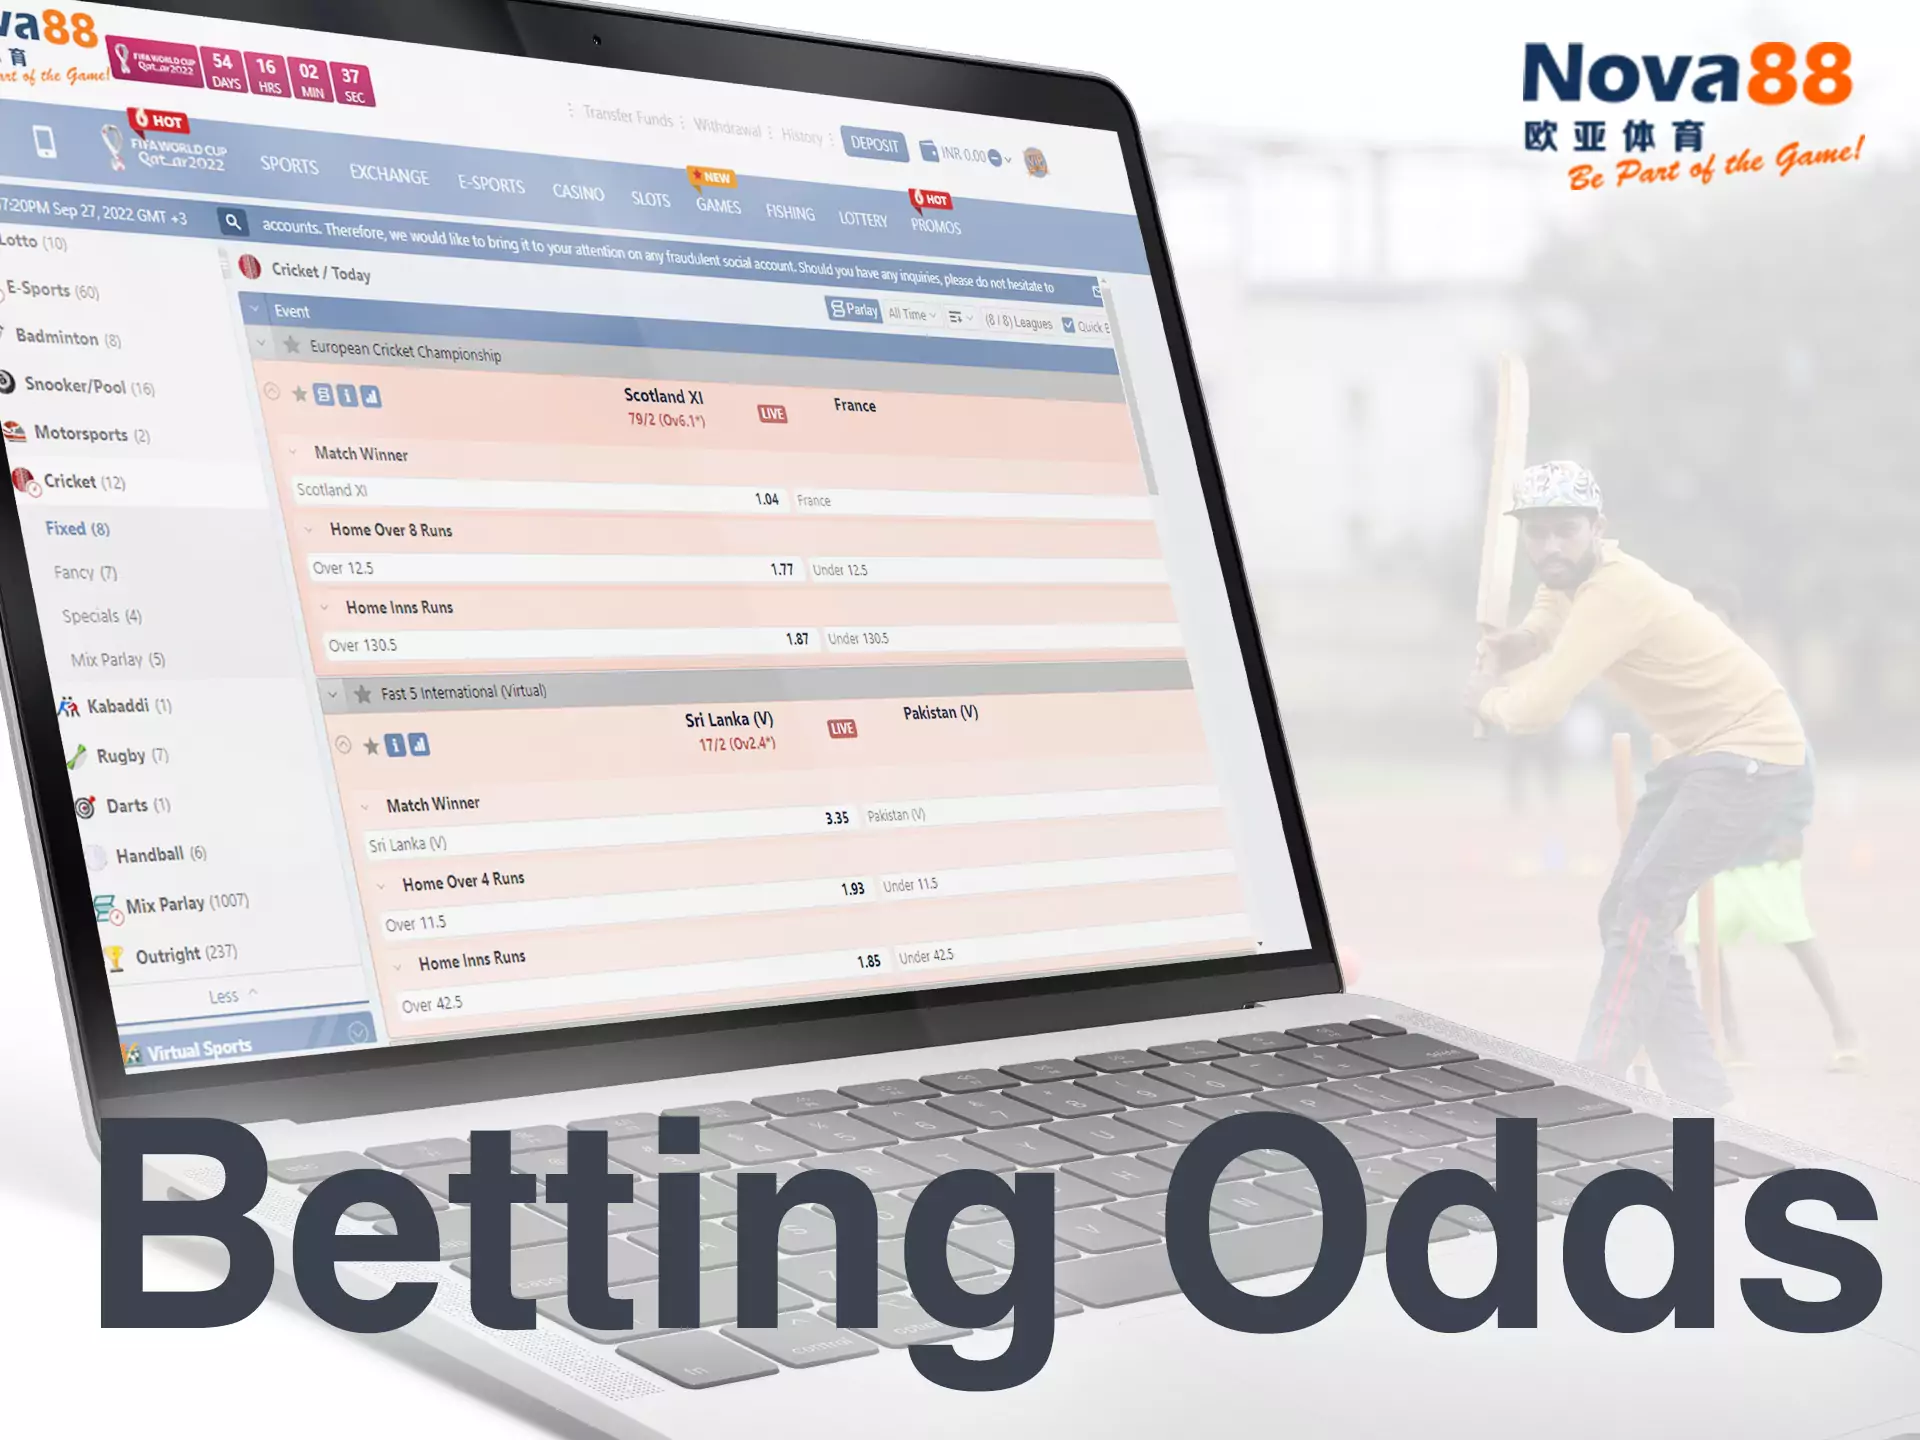 On the Nova88 website, bettors cherish high and fair odds.